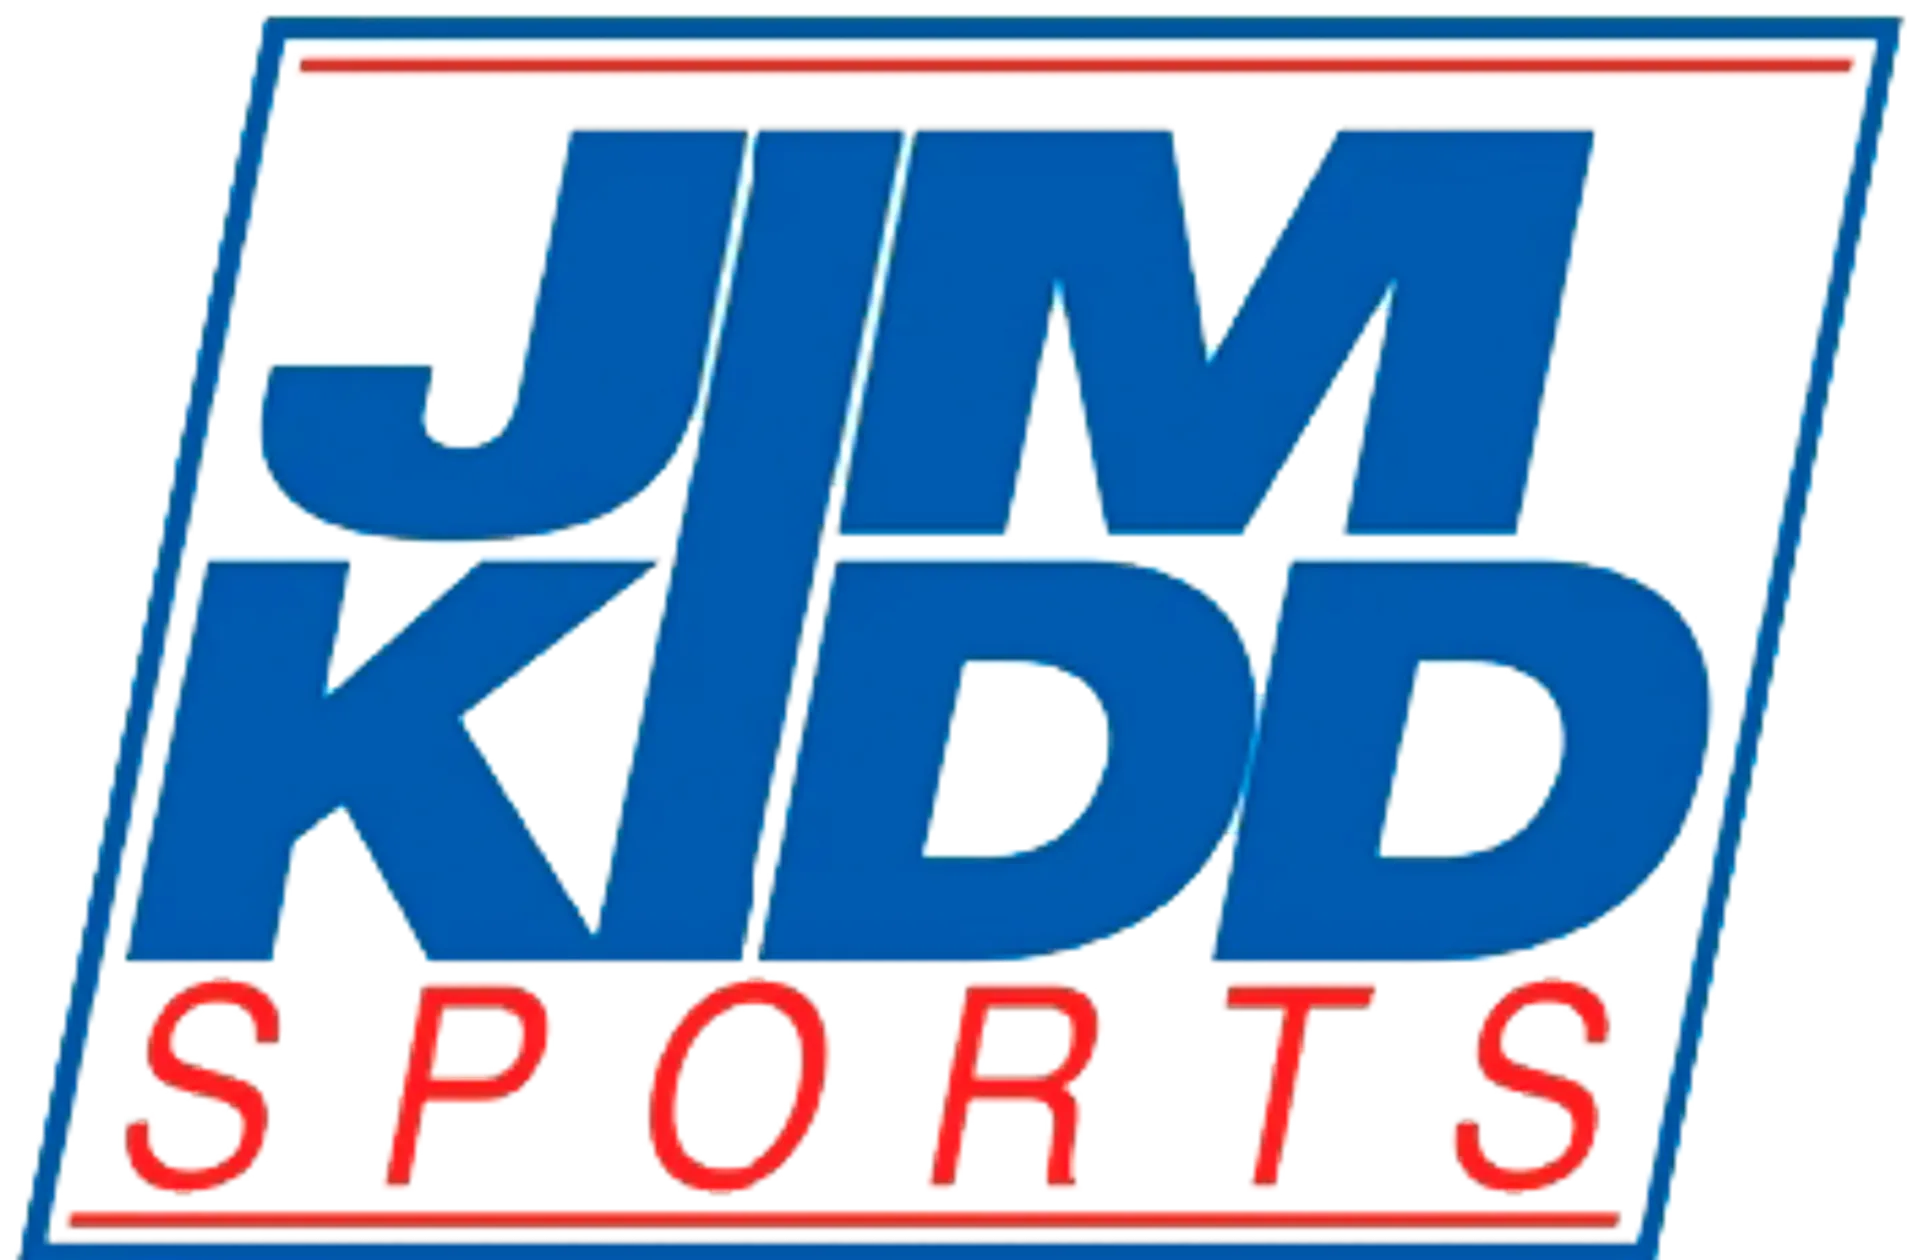 JIM KIDD SPORTS logo of current catalogue